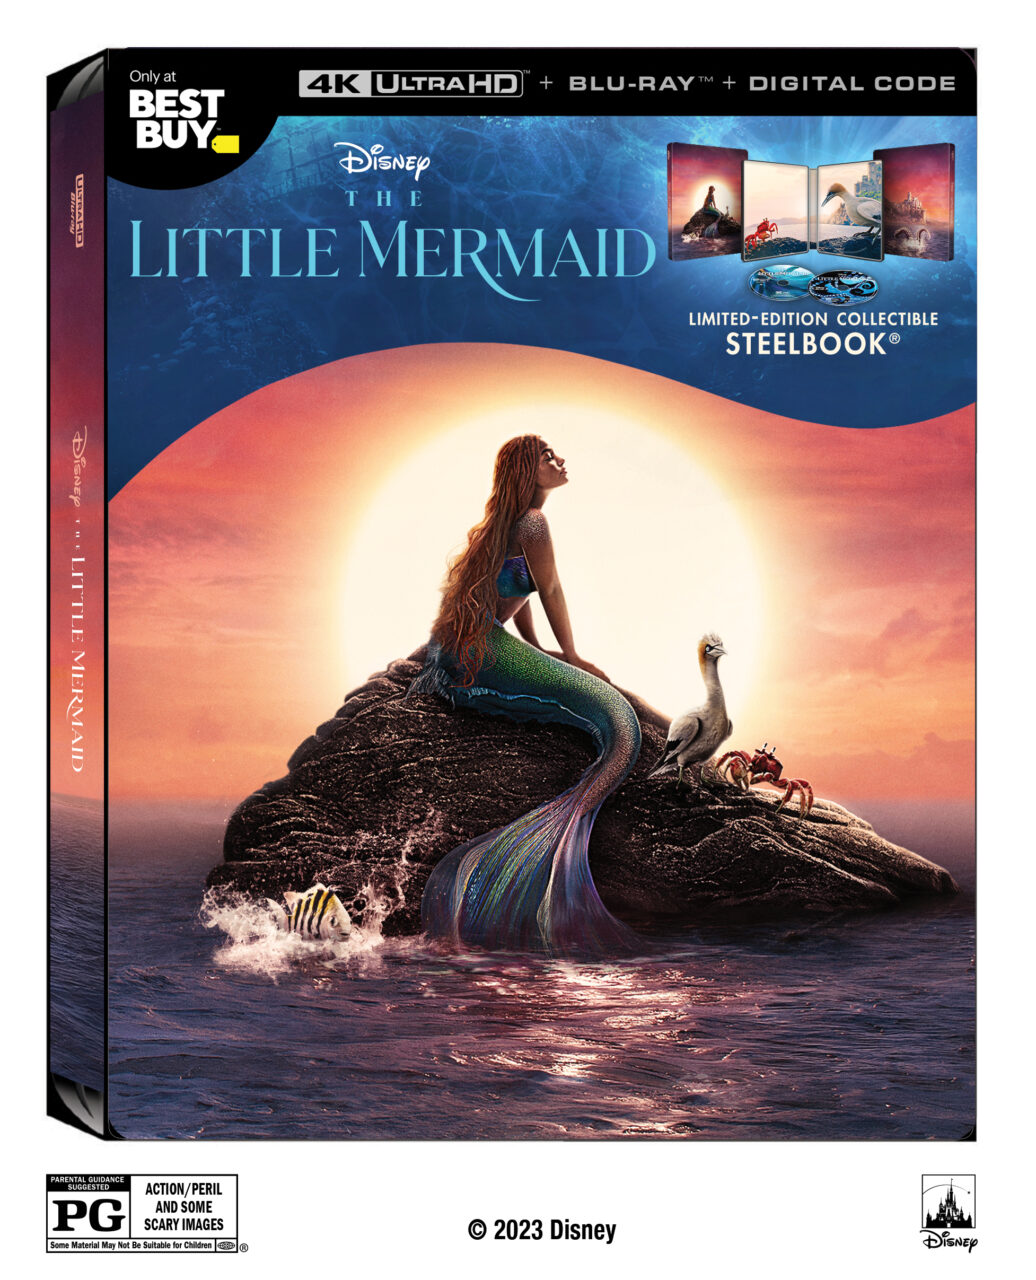 The Little Mermaid BestBUy 4K Ultra HD Combo Pack cover (Disney)